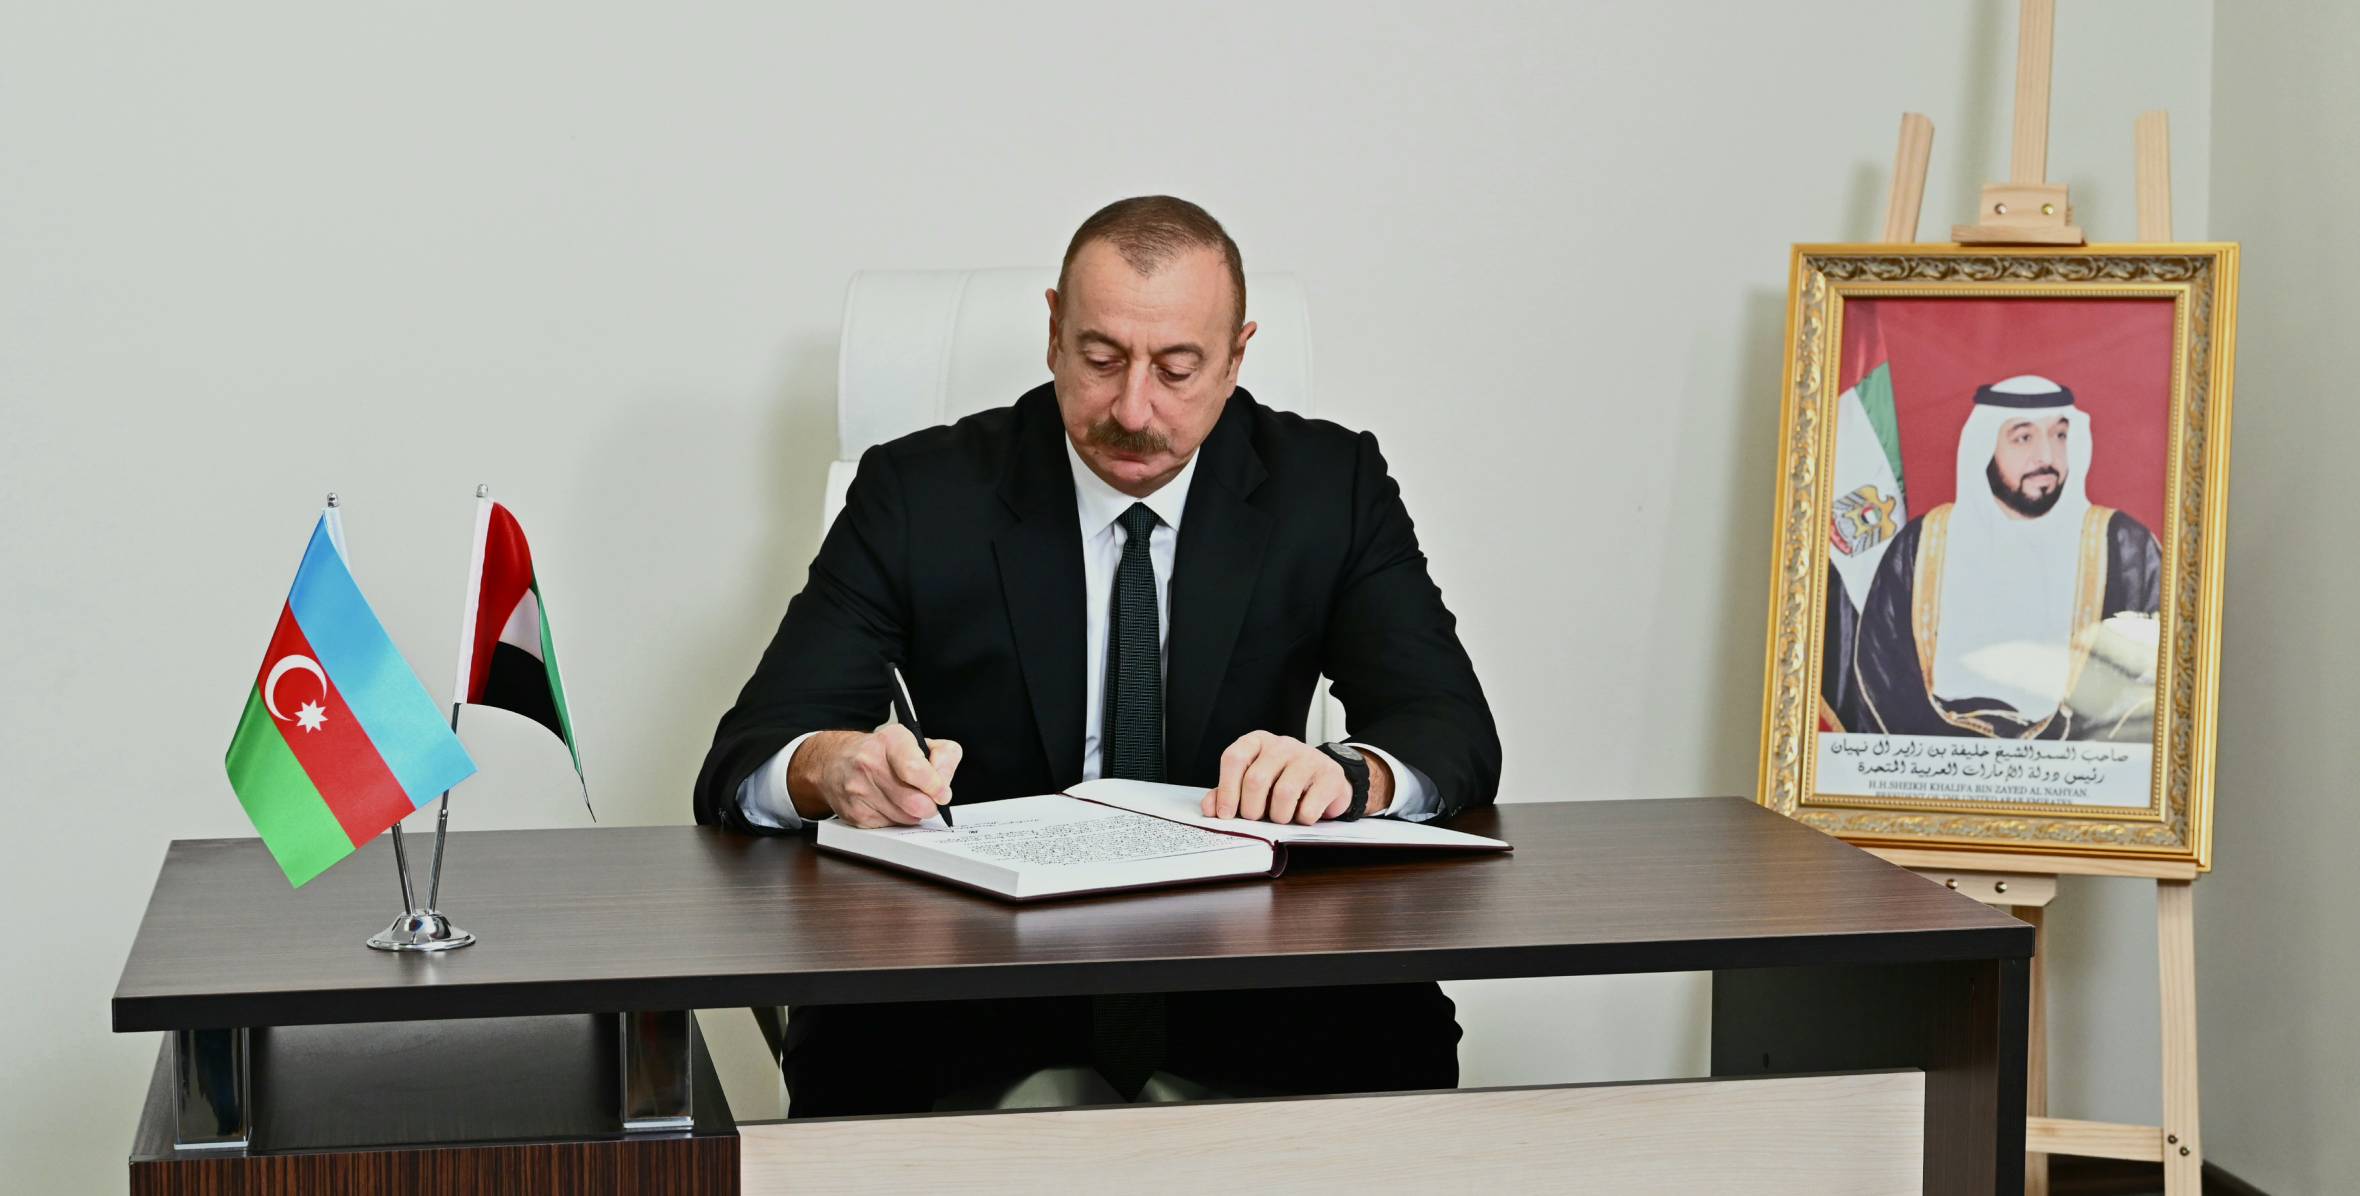 Ilham Aliyev visited embassy of UAE in Baku, offered condolences over the demise of President Sheikh Khalifa bin Zayed Al Nahyan